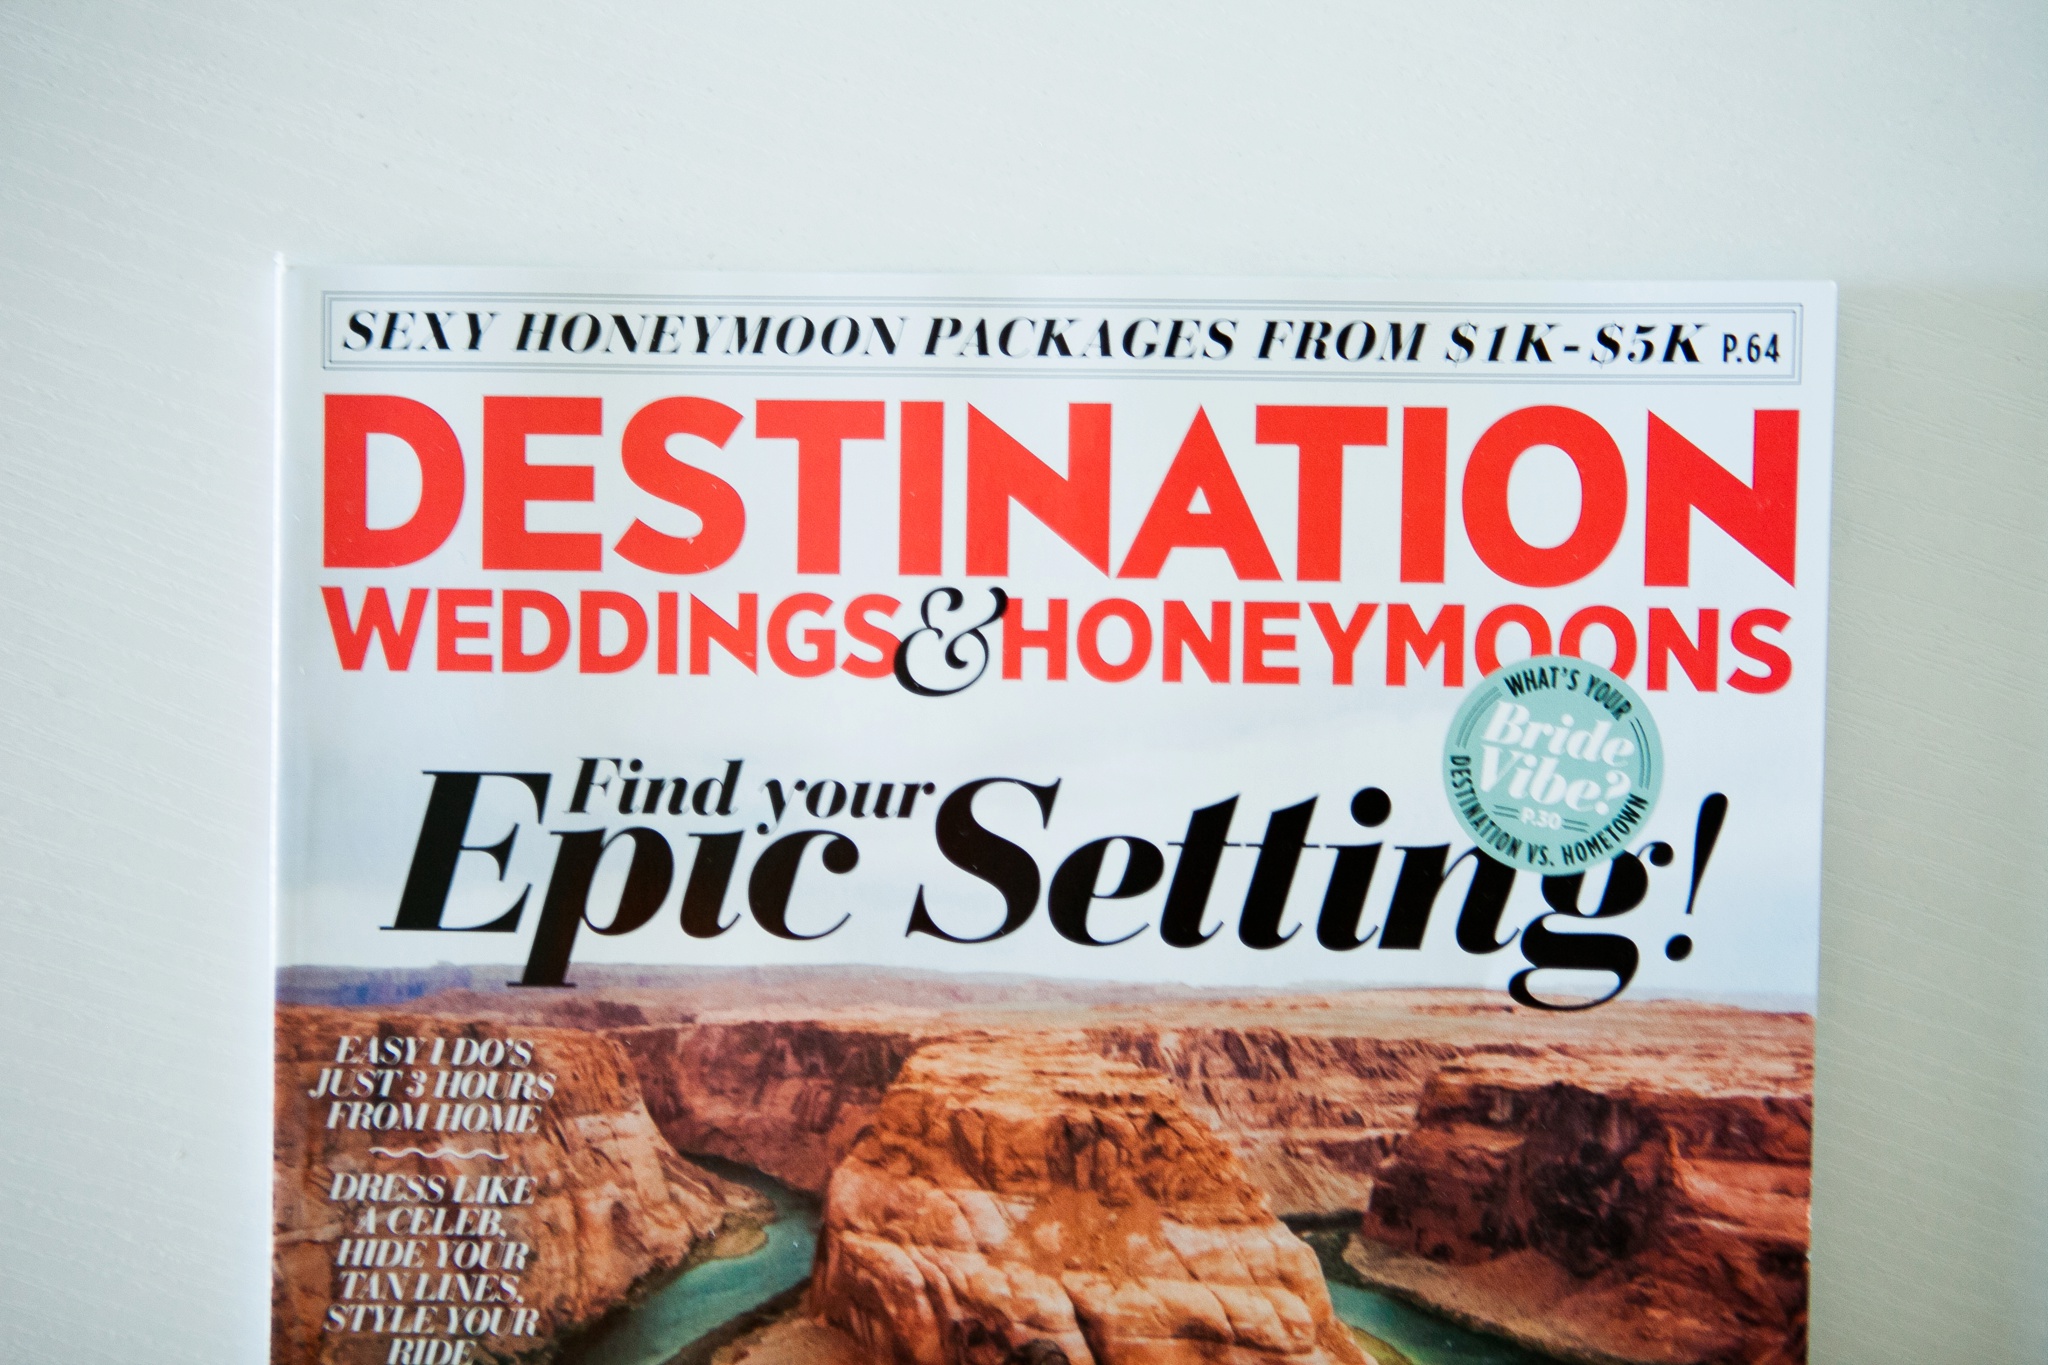 Destination Weddings & Honemoons Feature_0002